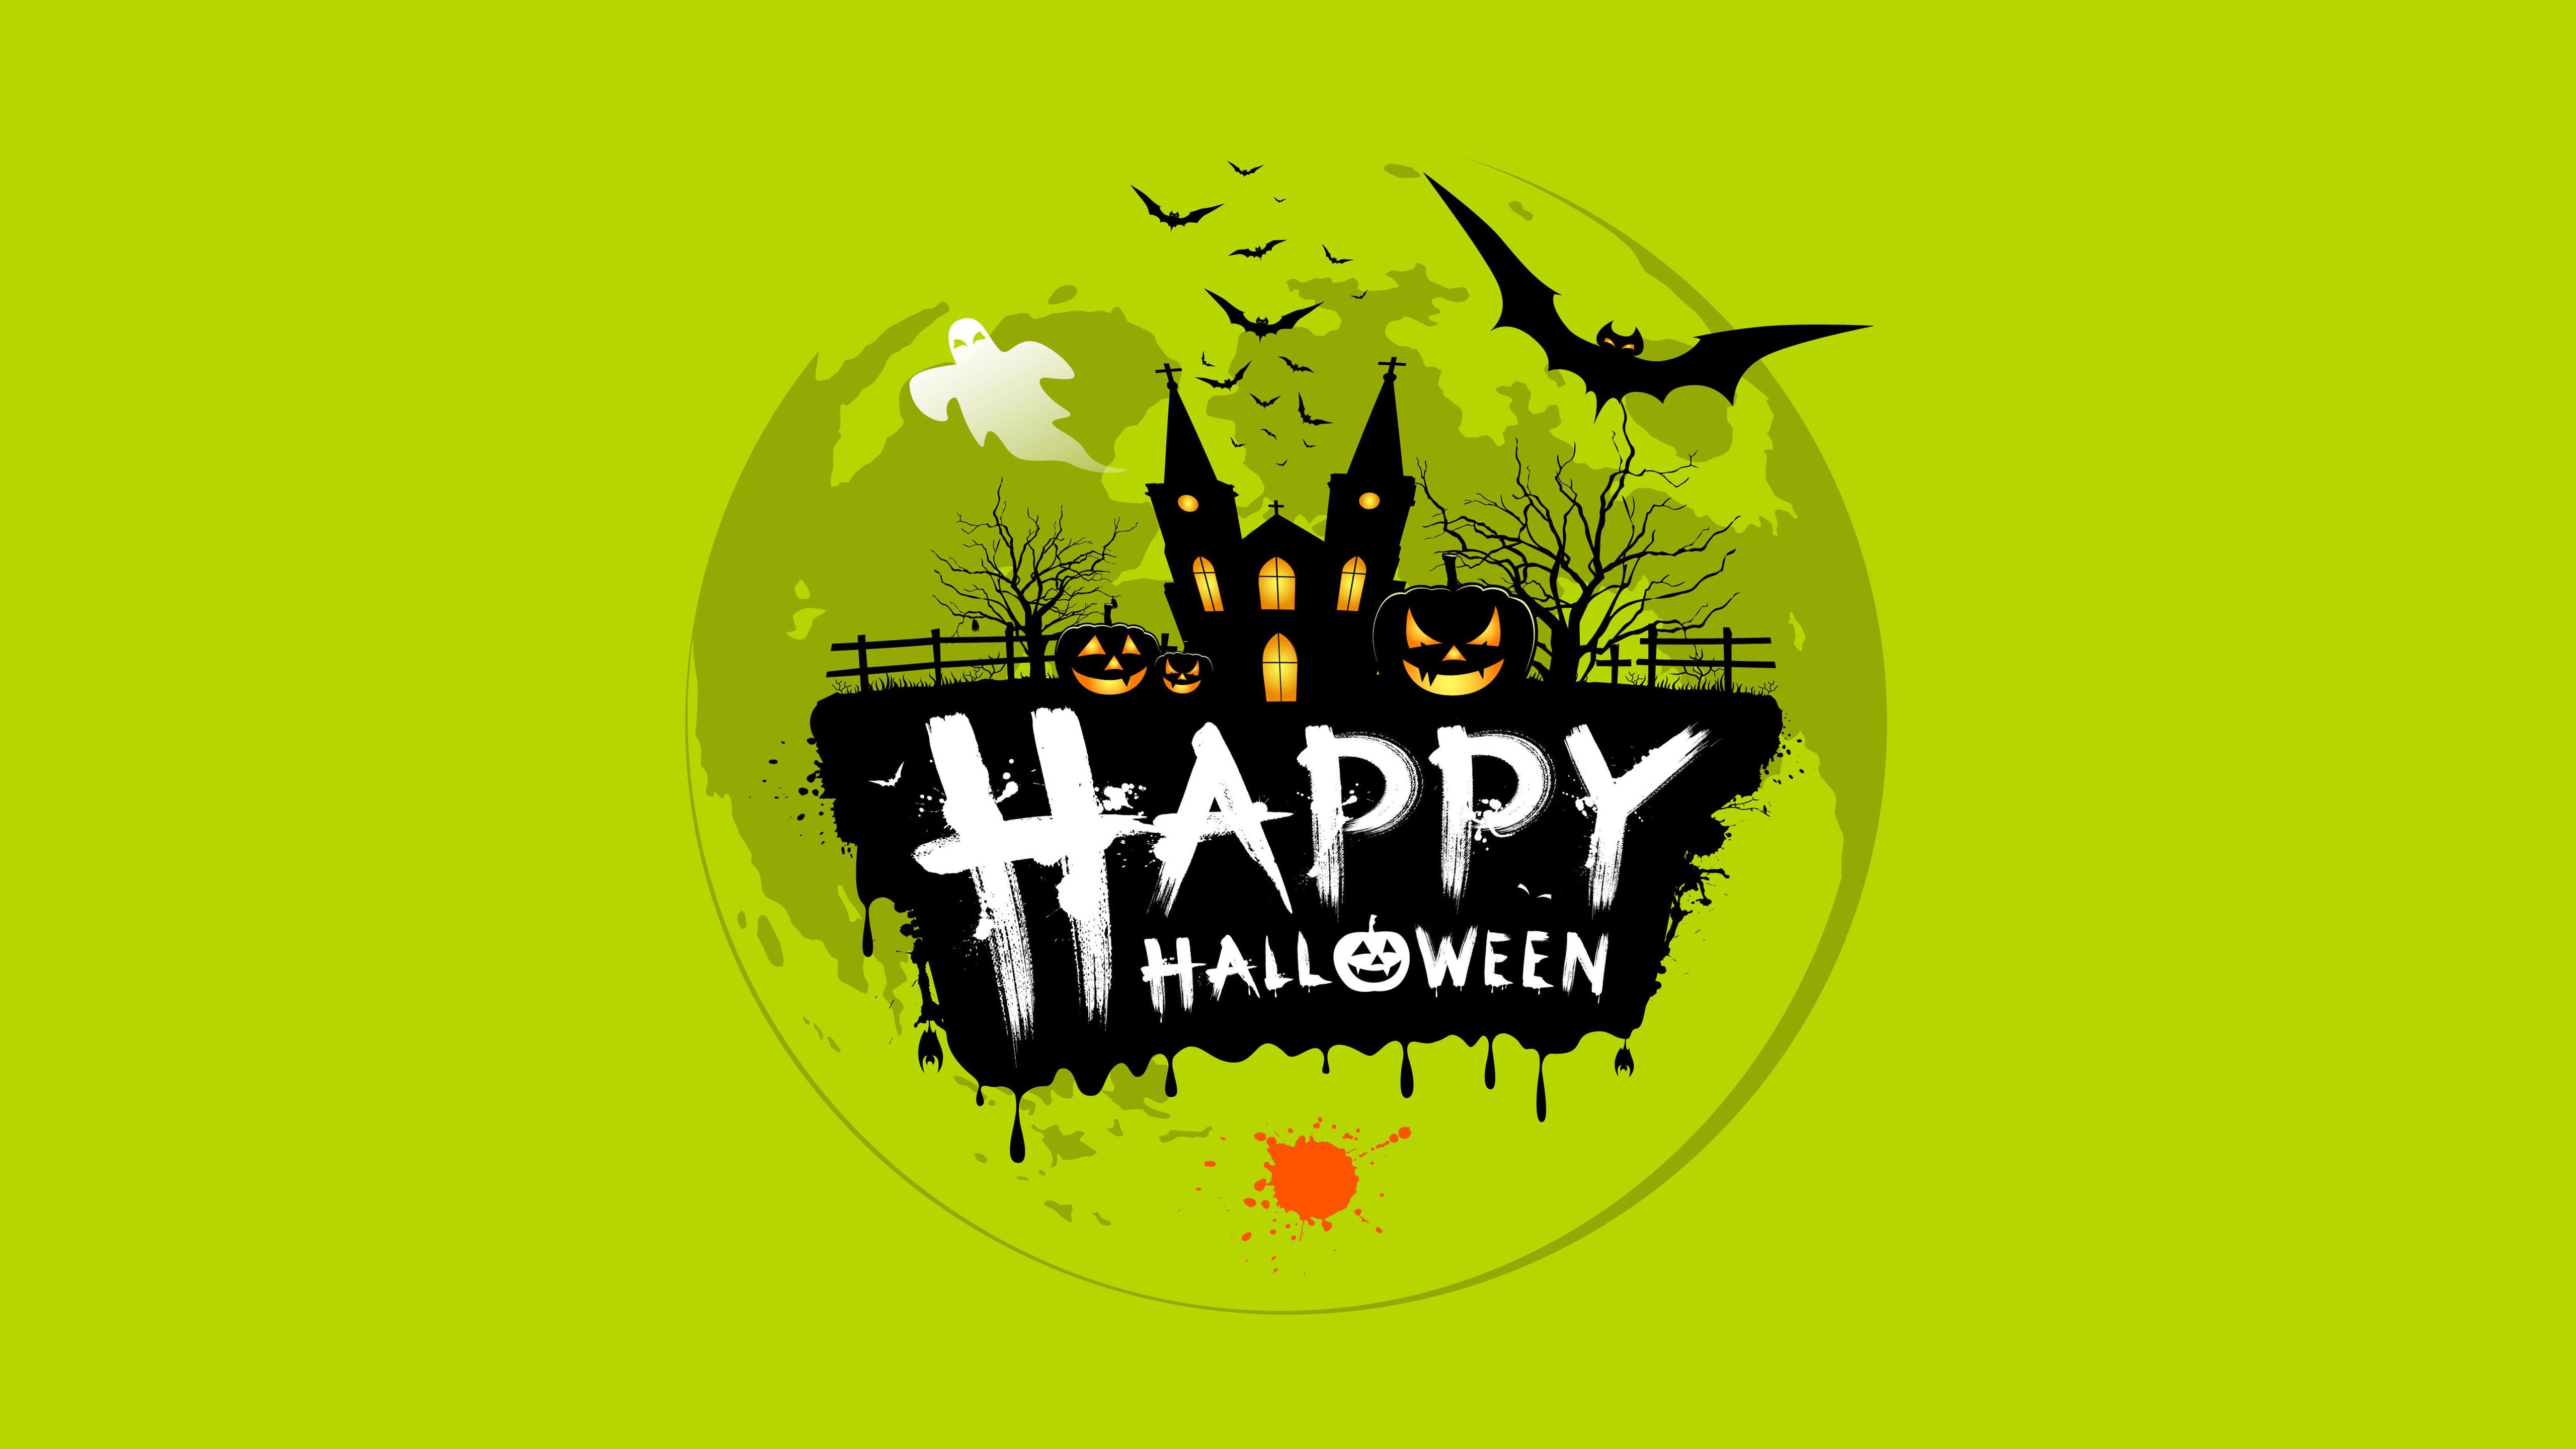 Halloween, Digital art, Green background, Typography Wallpapers HD